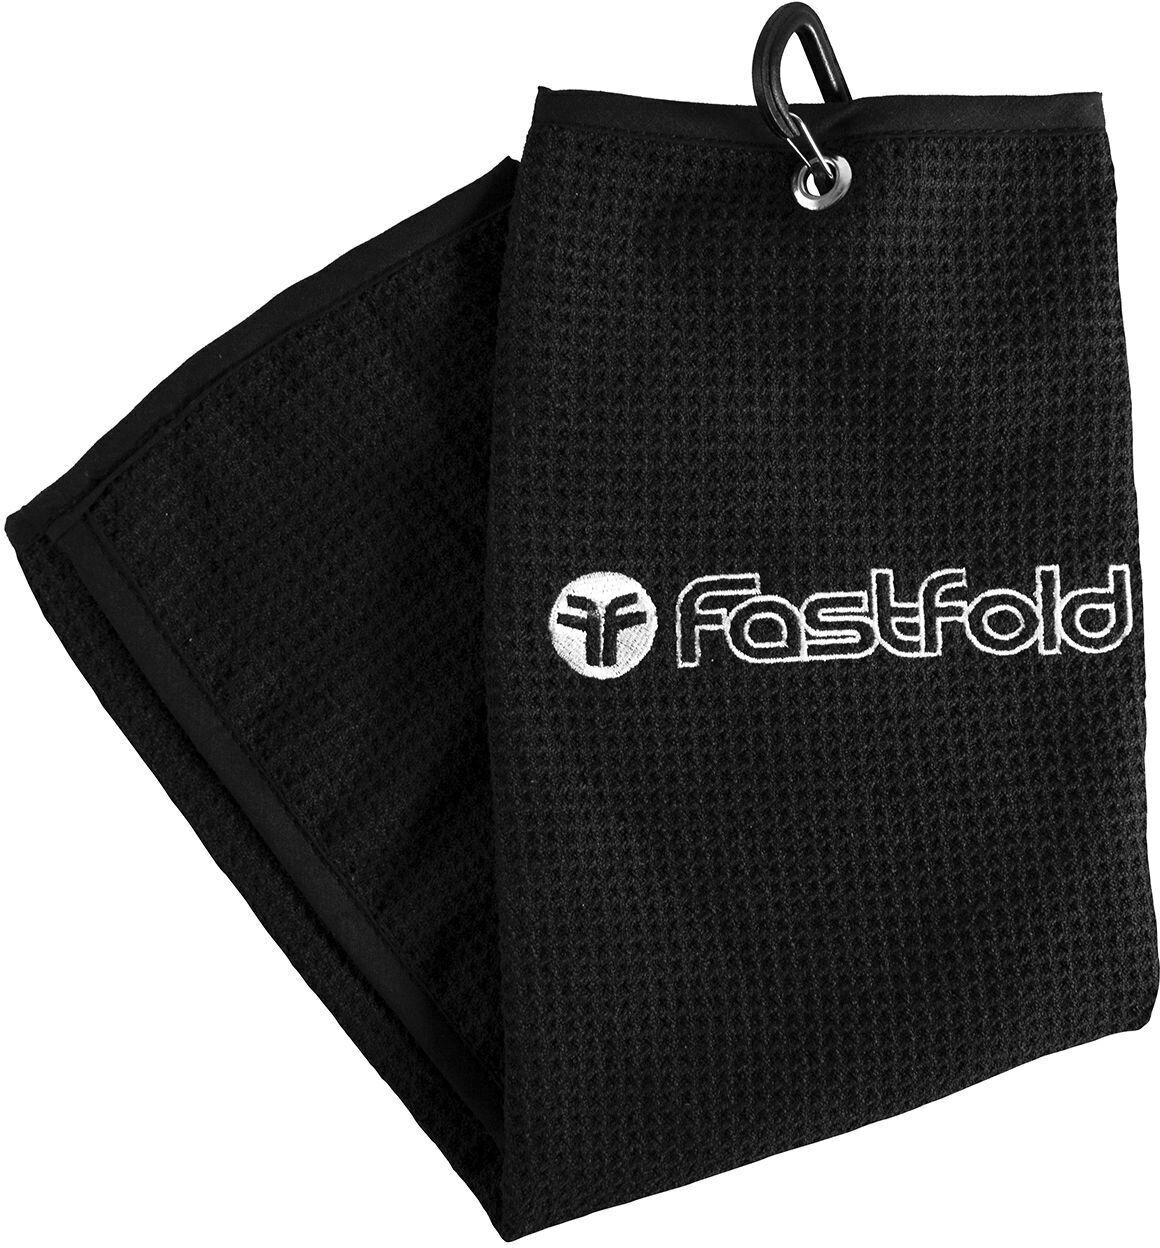 Fastfold Towel Black Fastfold